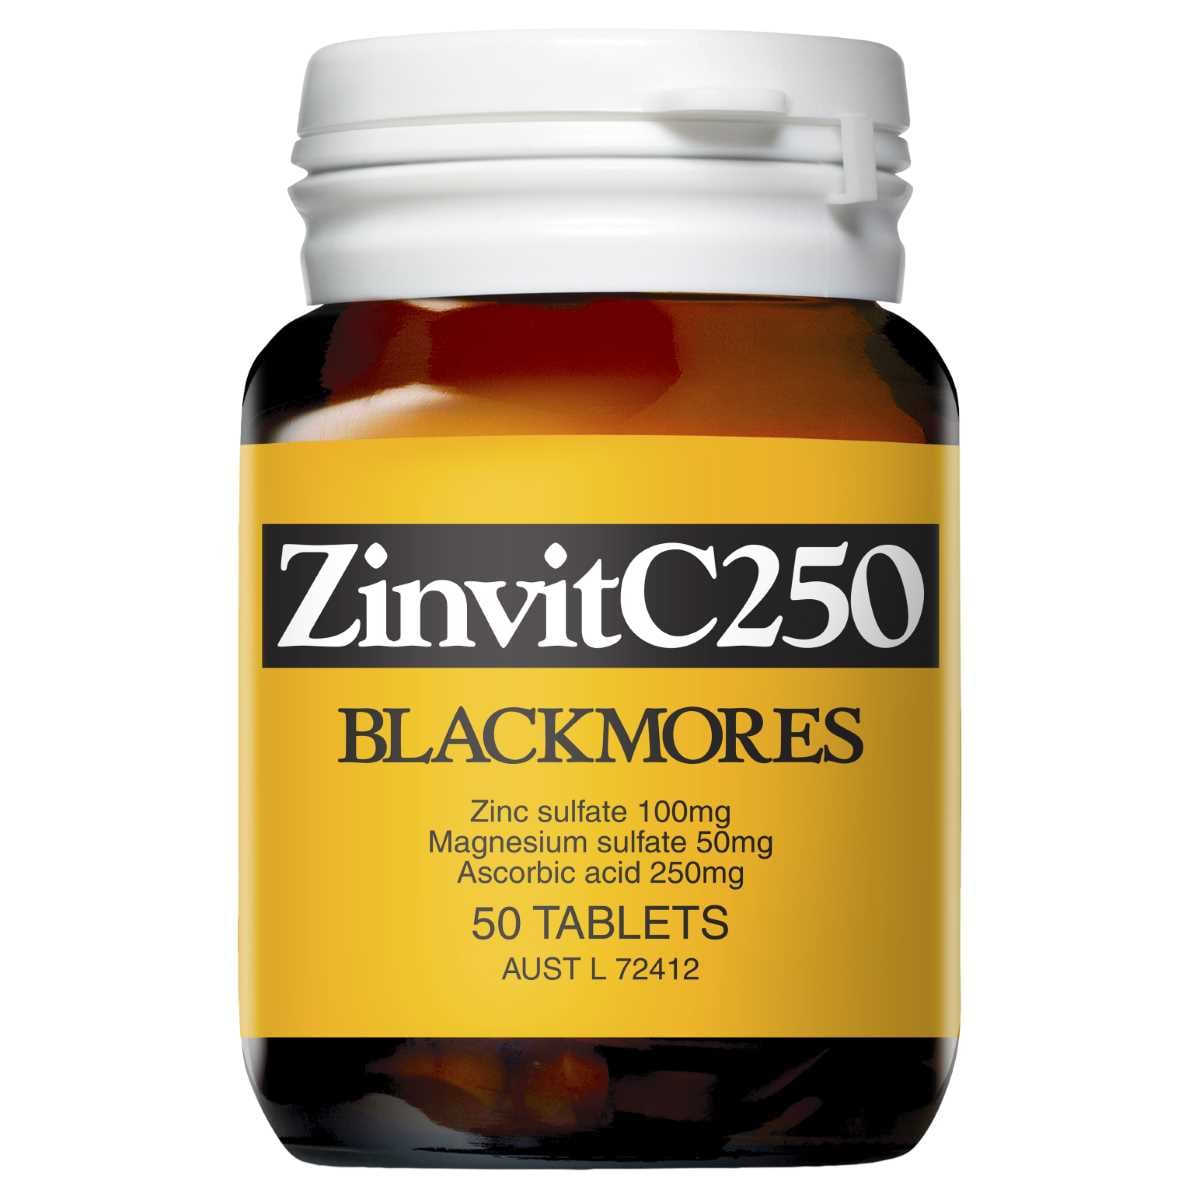 Blackmores ZinvitC250 50 Tablets